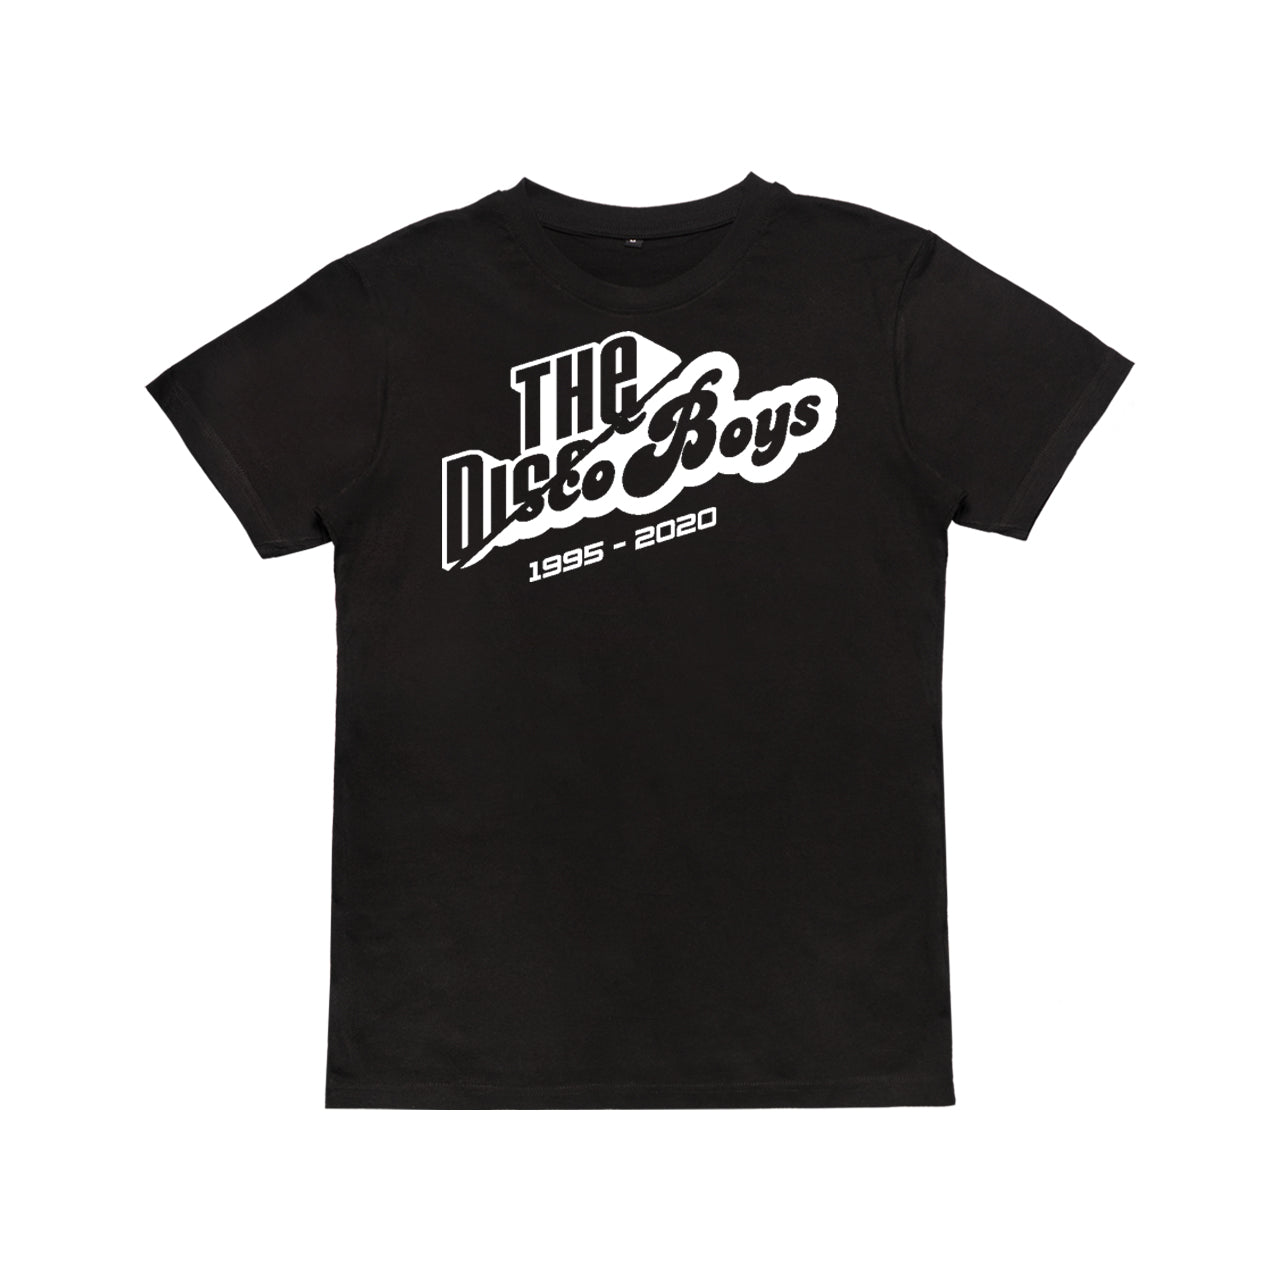 The Disco Boys - Logomorph Shirt